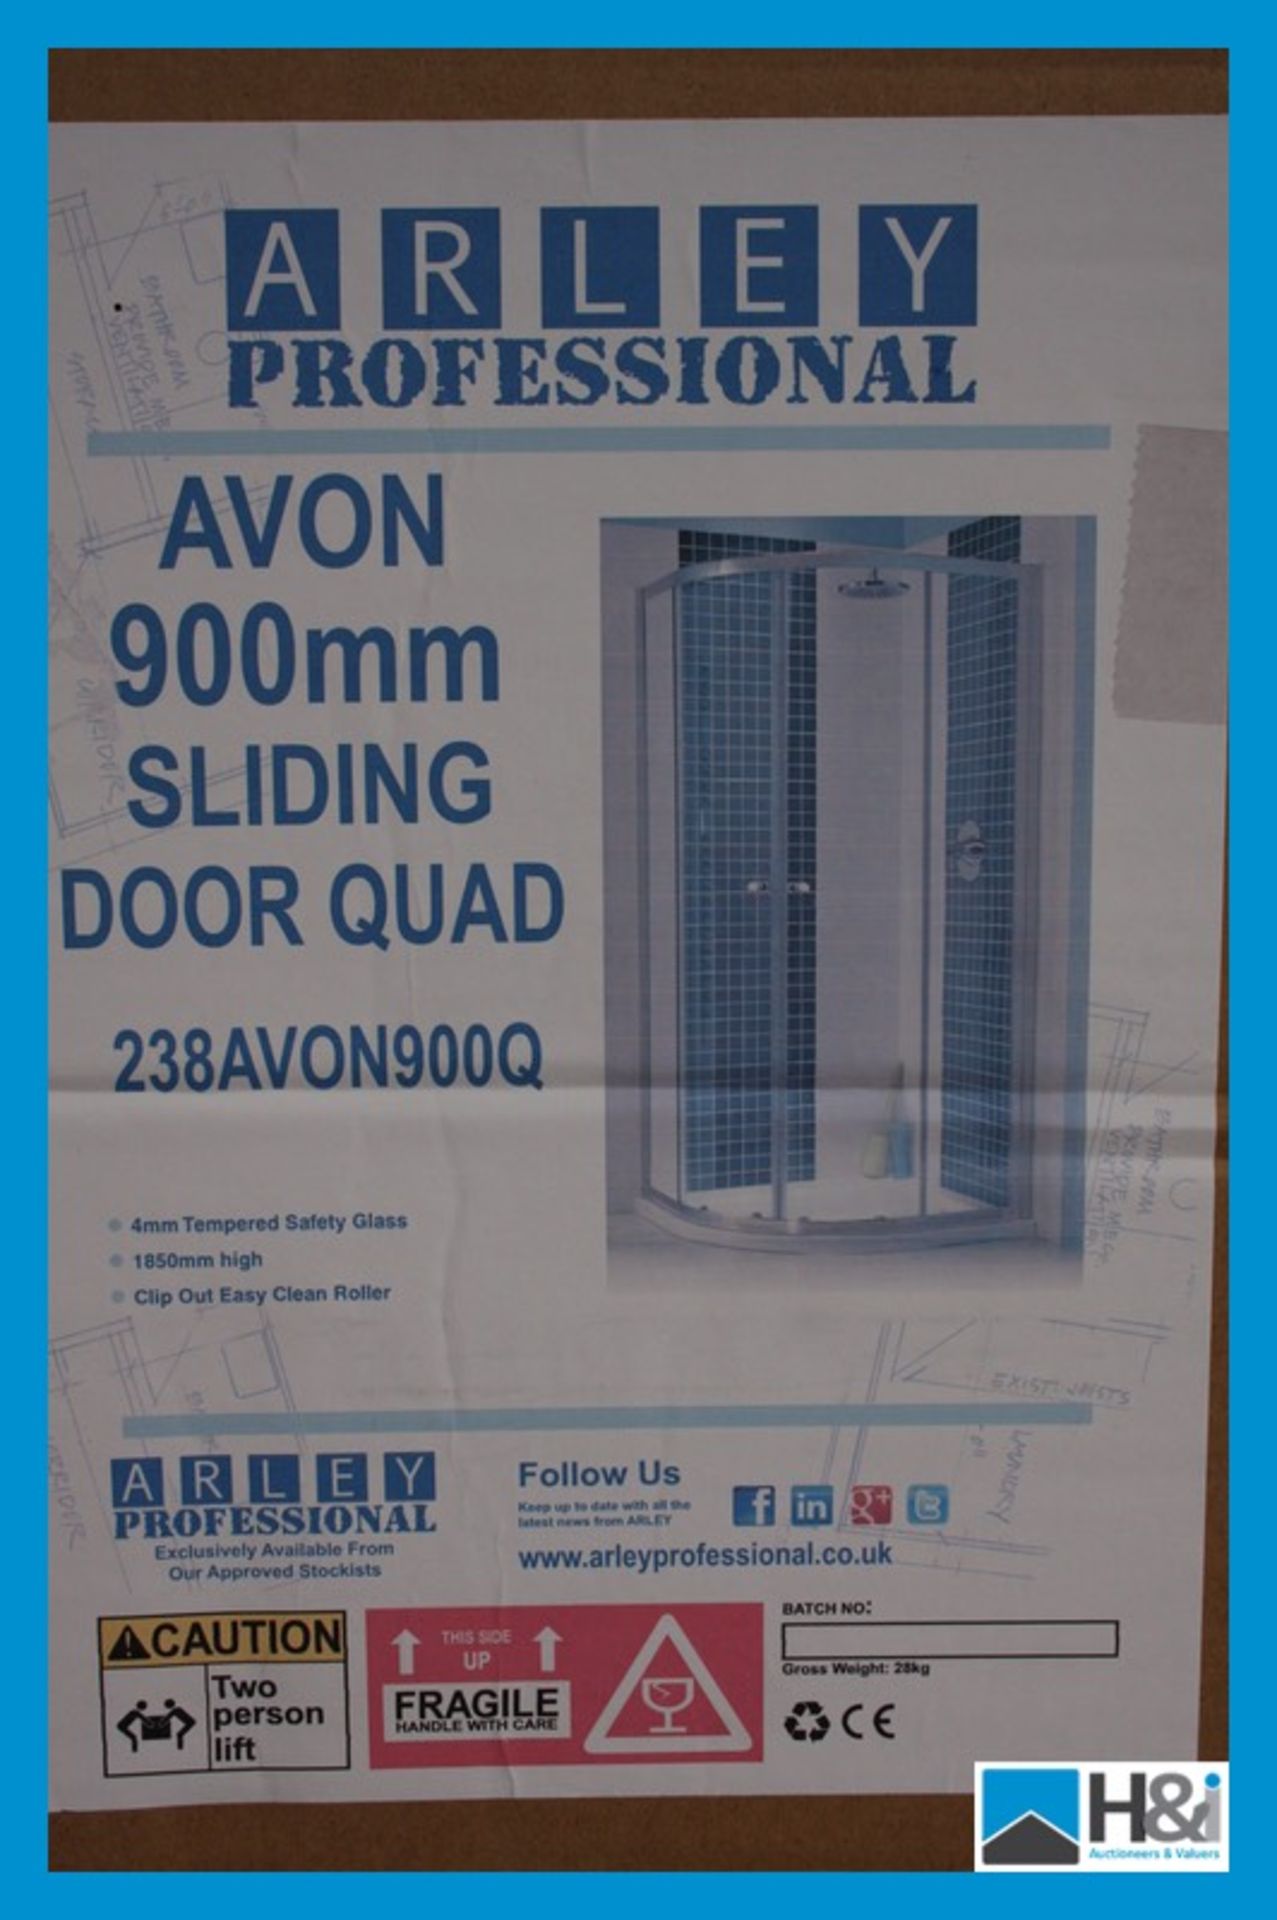 Arley Professional Avon 900mm Sliding Door Quad, 238AVON900Q. Brand New in Box. RRP £199 - Image 2 of 2